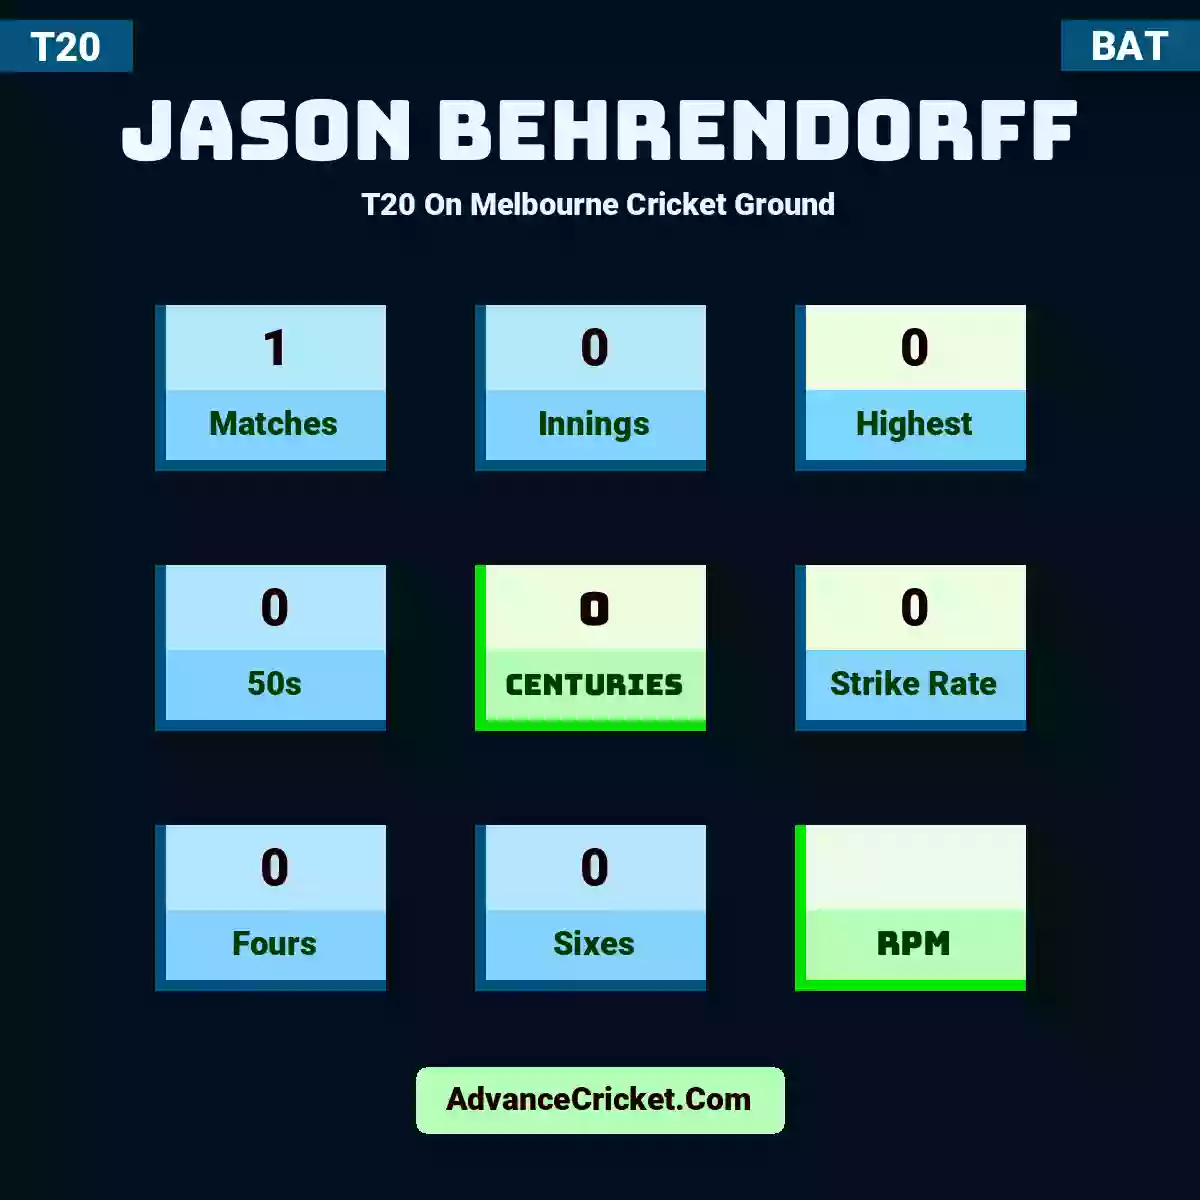 Jason Behrendorff T20  On Melbourne Cricket Ground, Jason Behrendorff played 1 matches, scored 0 runs as highest, 0 half-centuries, and 0 centuries, with a strike rate of 0. J.Behrendorff hit 0 fours and 0 sixes.